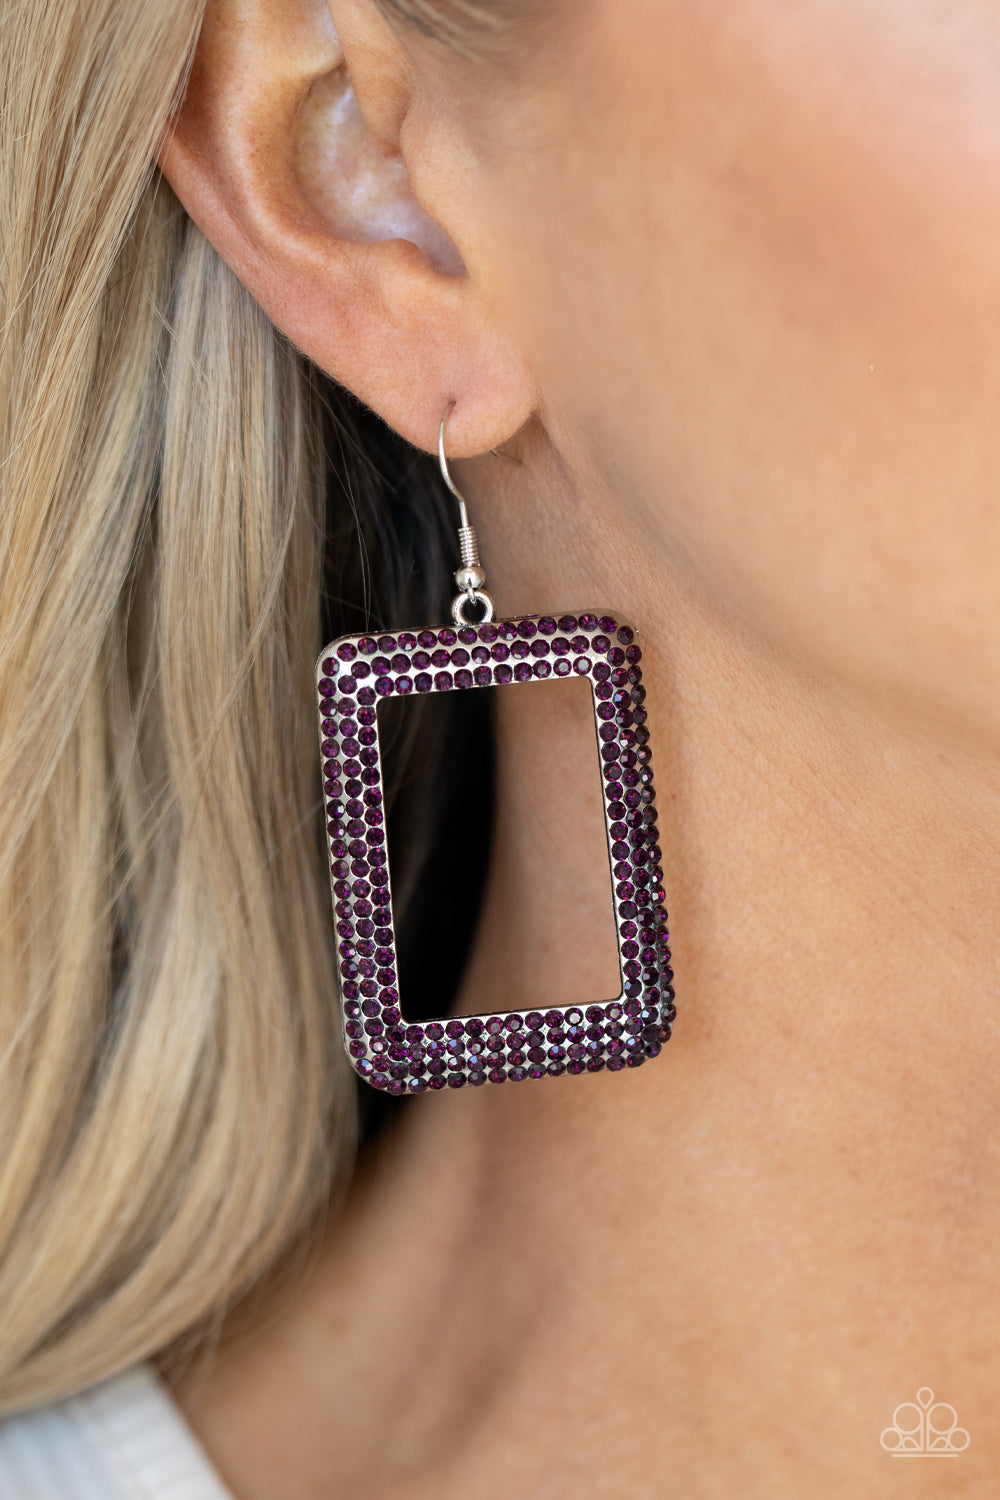 PRE-ORDER - Paparazzi World FRAME-ous - Purple Rhinestones - Earrings - $5 Jewelry with Ashley Swint